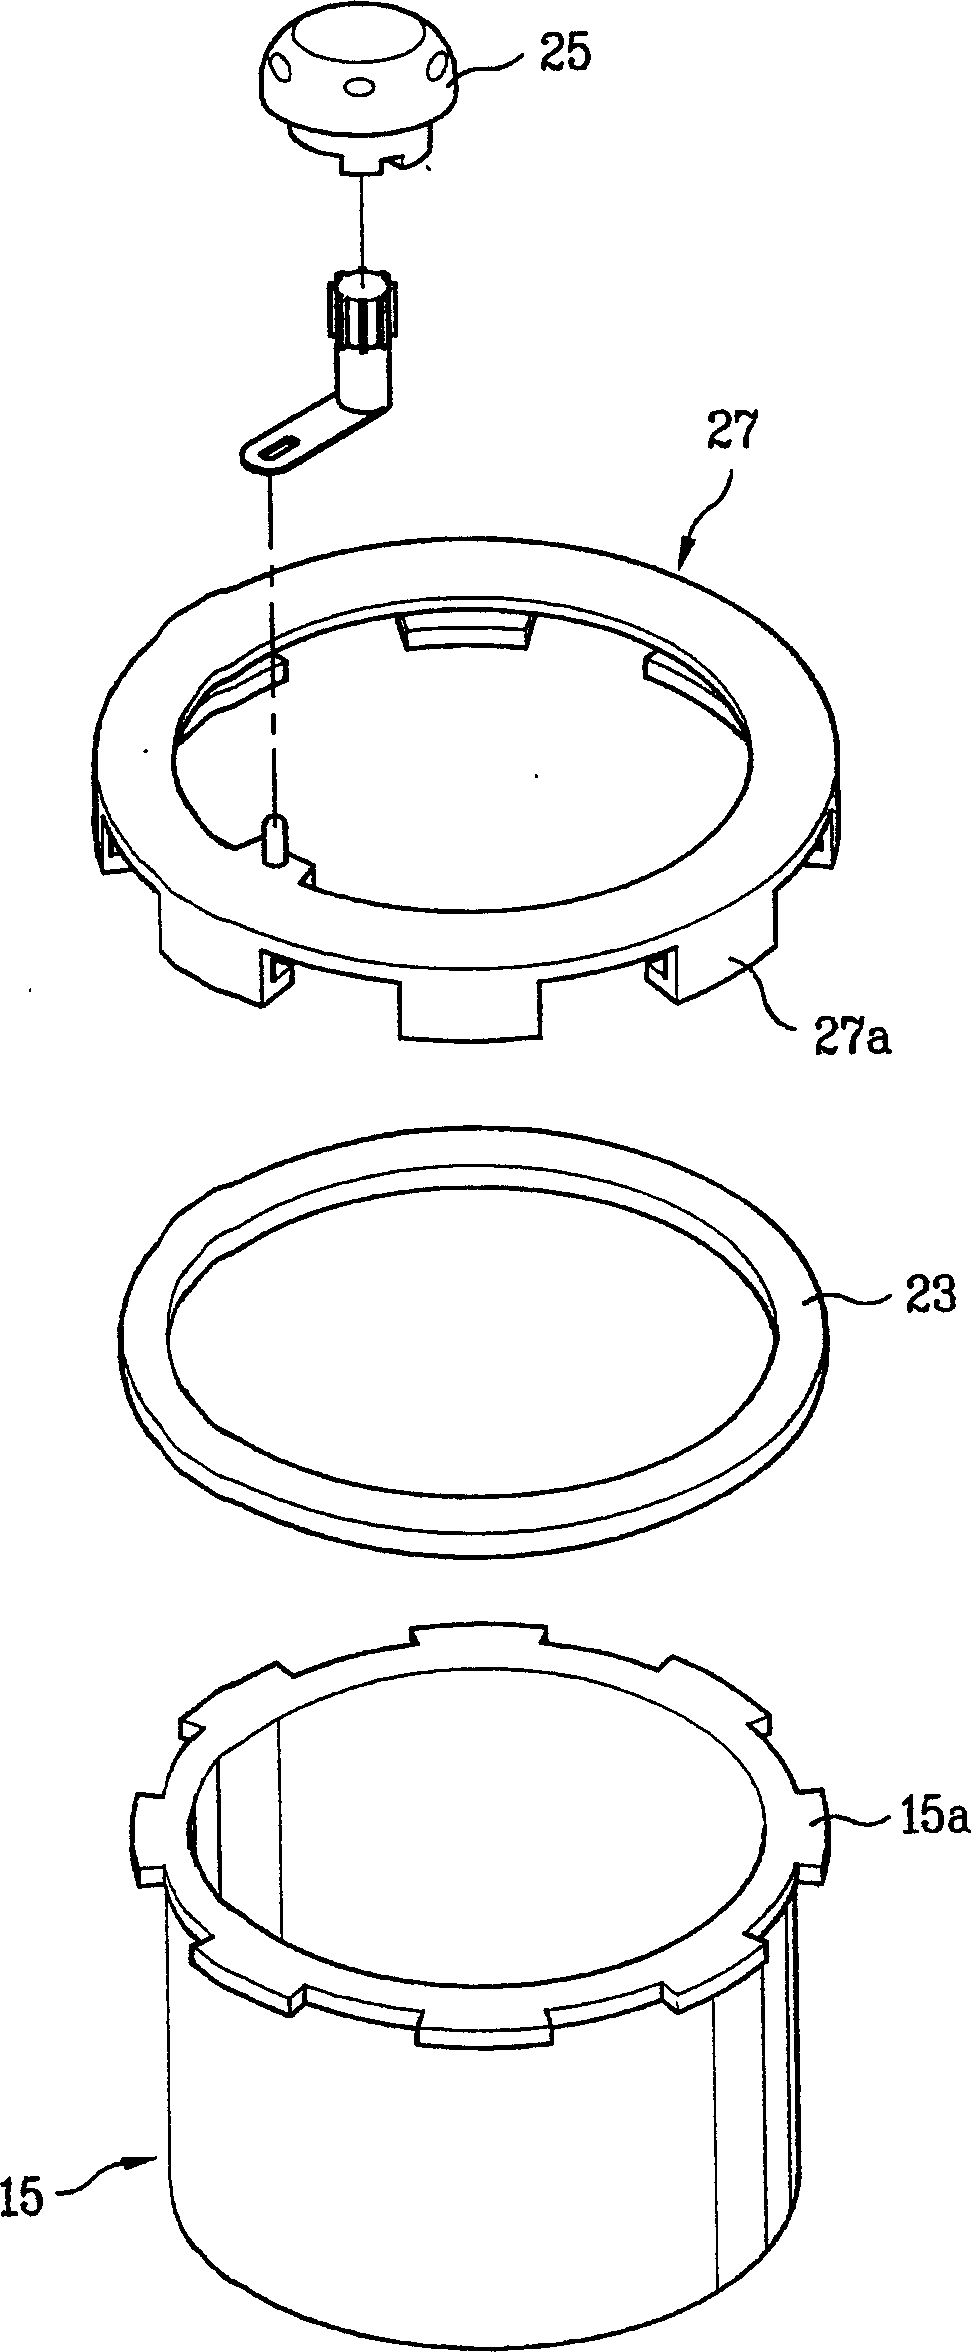 Electric cooker lid locking arrangement